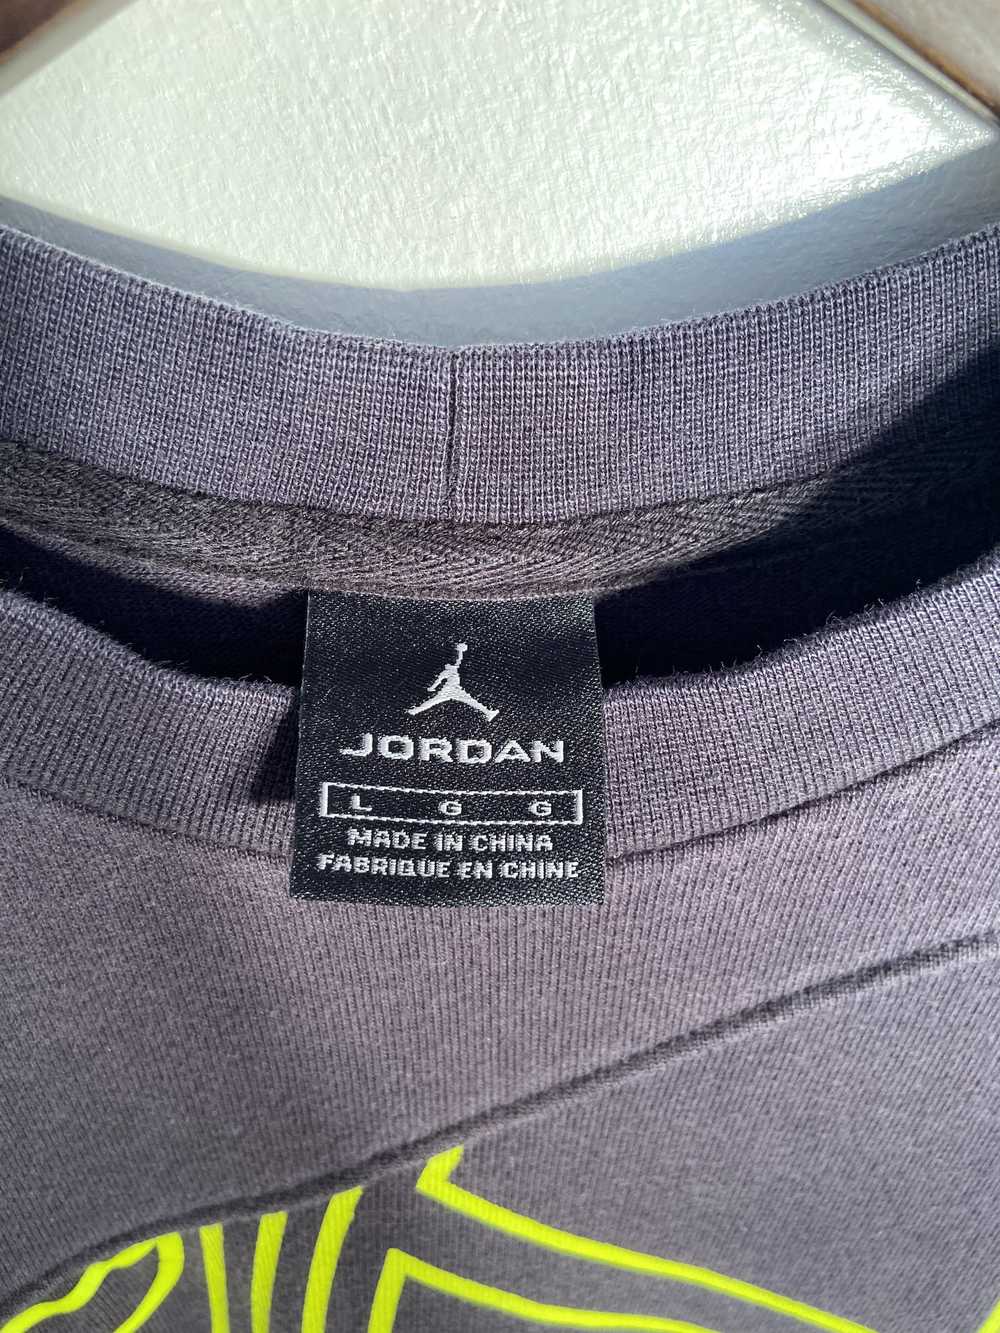 Jordan Brand Vintage x Jordan Brand T-Shirt - image 7